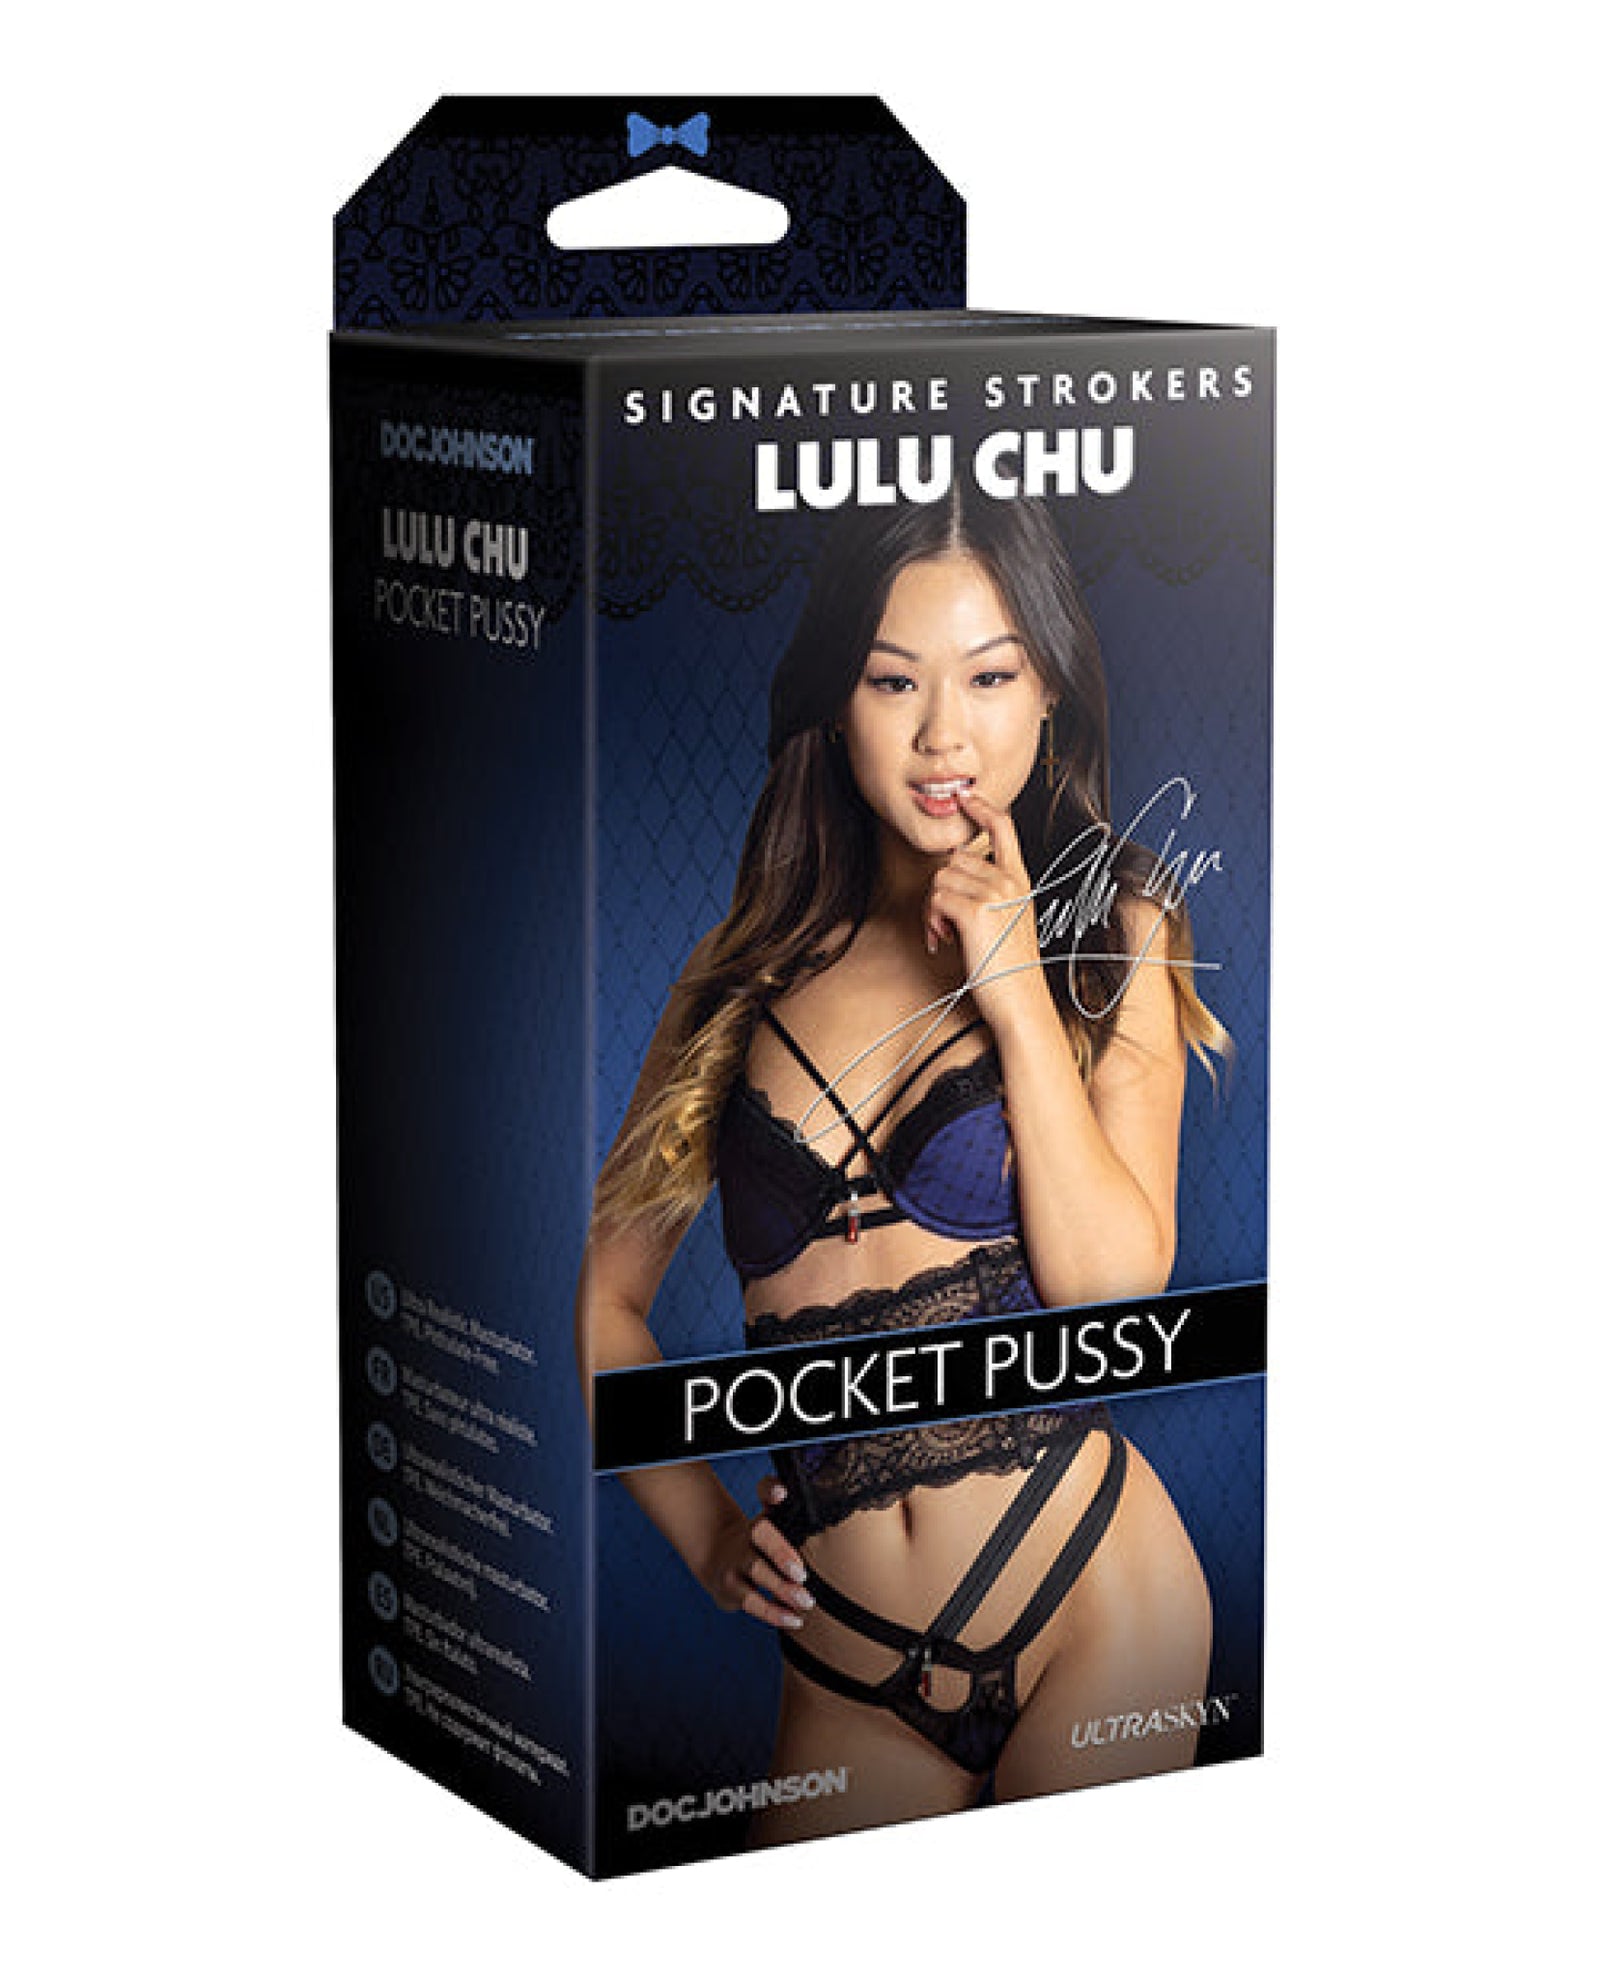 Signature Strokers Ultraskyn Pocket Pussy - Lulu Chu Doc Johnson